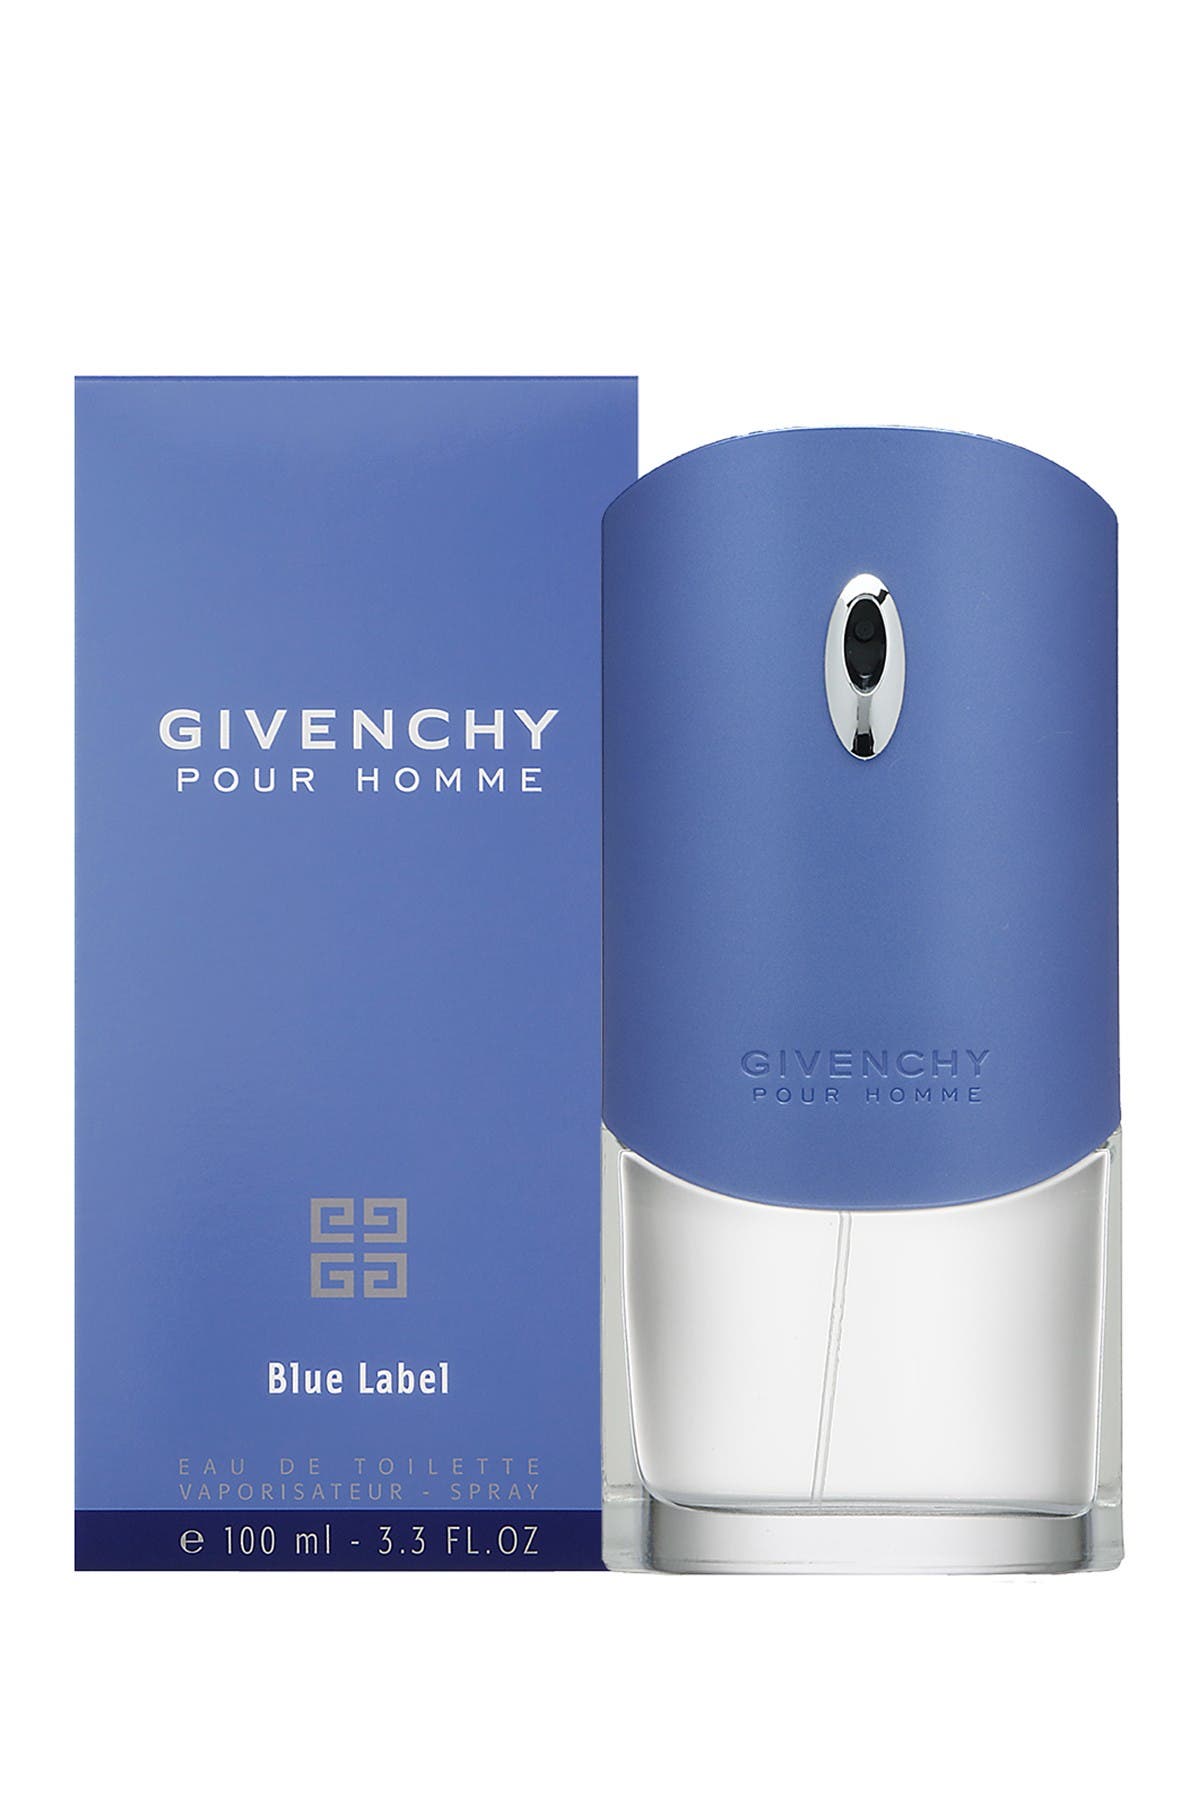 givenchy pour homme blue label review